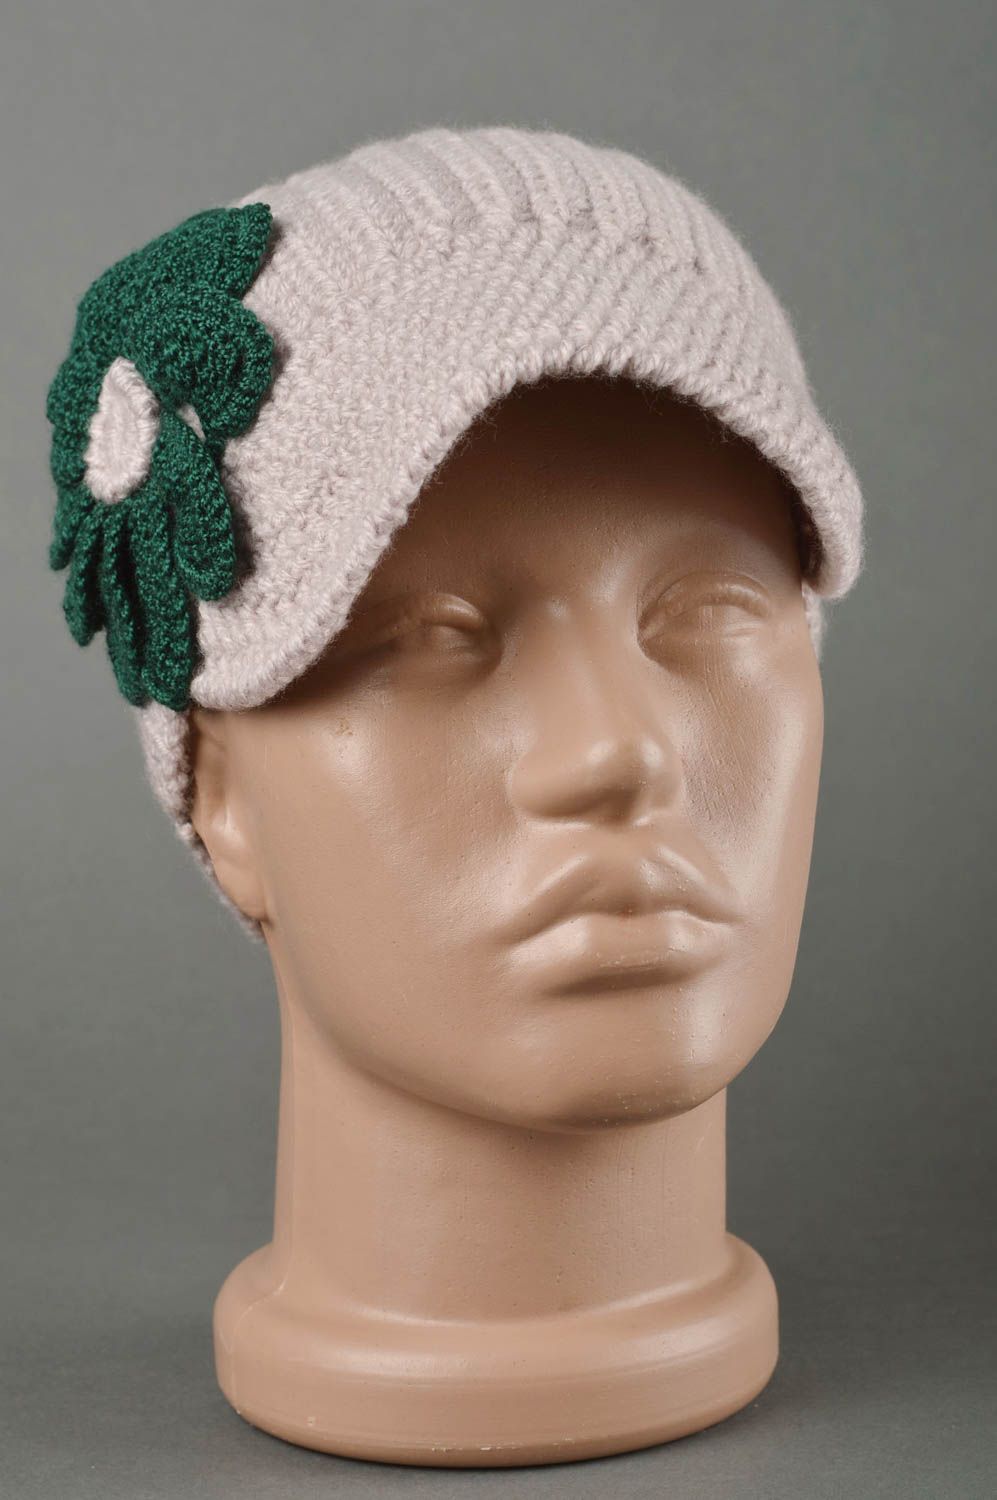 Handmade crochet hat girls cap accessories for girls crochet cap unique gifts photo 1